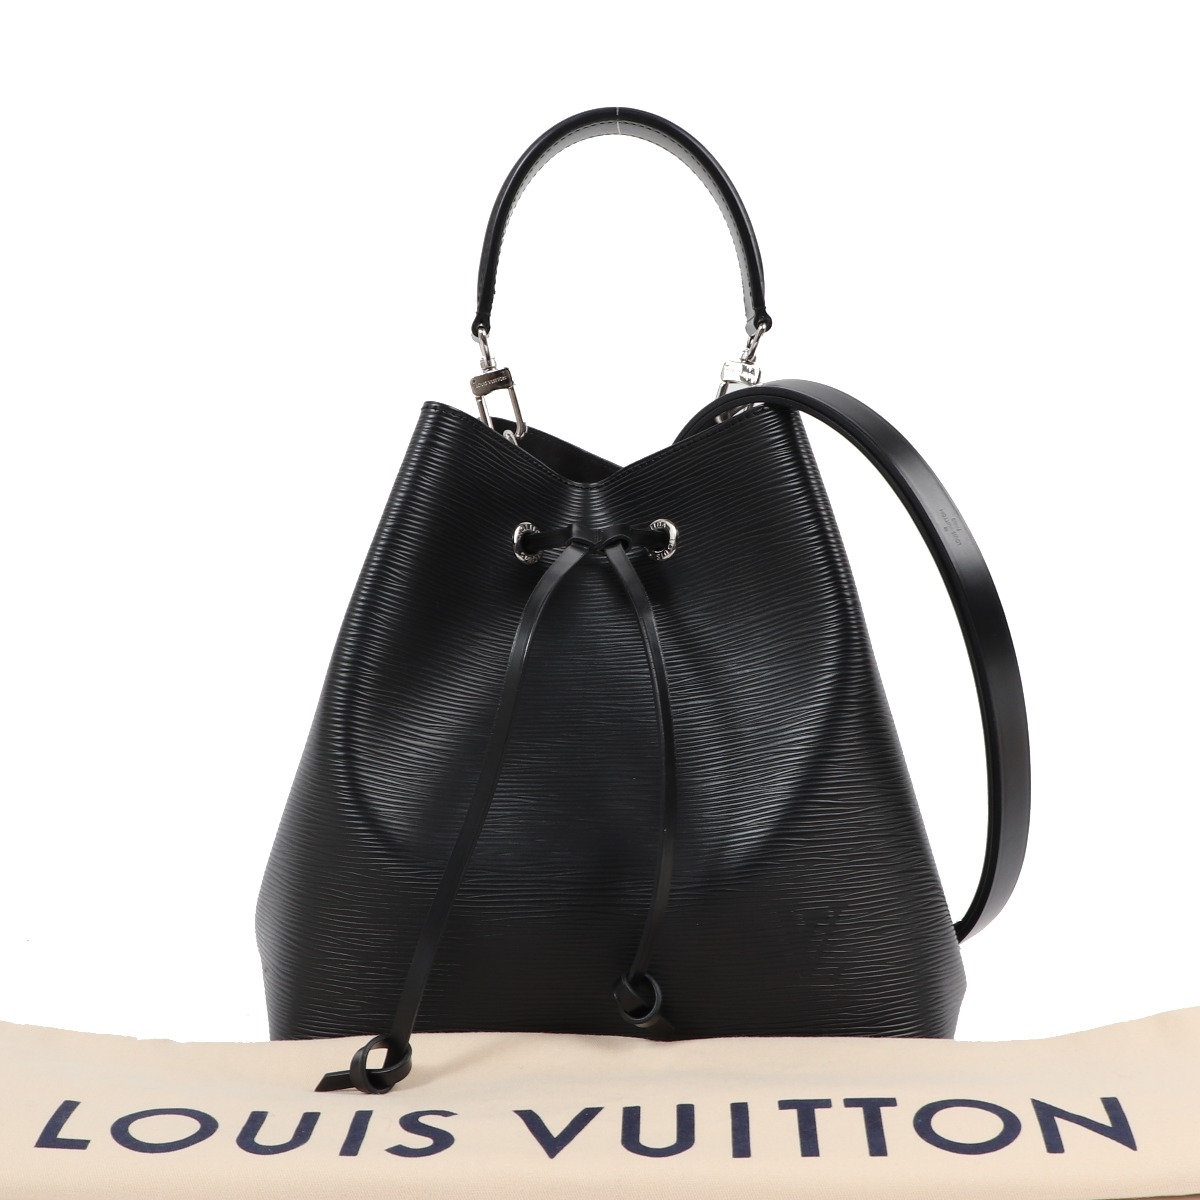 Louis Vuitton LV Black Epi Neo Noé QJBFSE10KB003